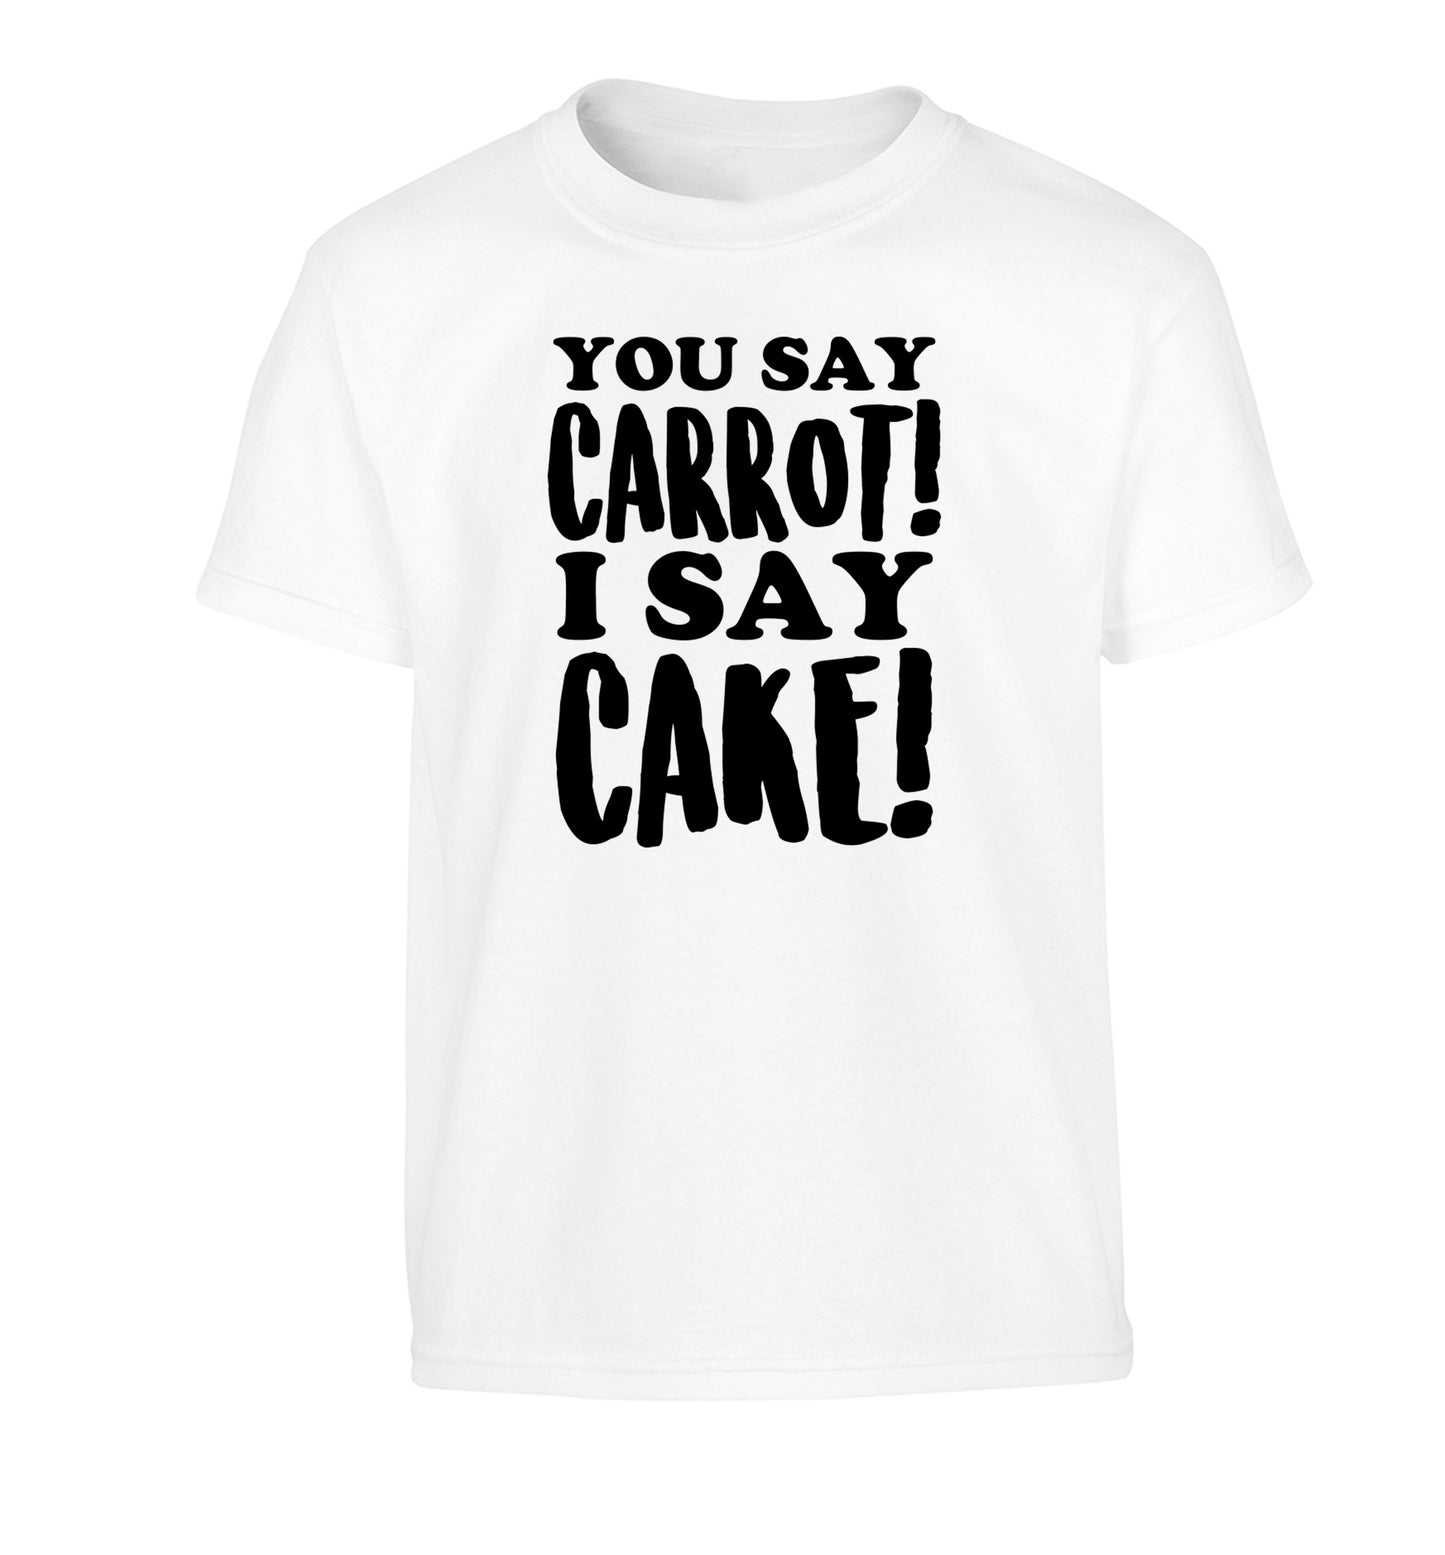 You say carrot I say cake! Children's white Tshirt 12-14 Years